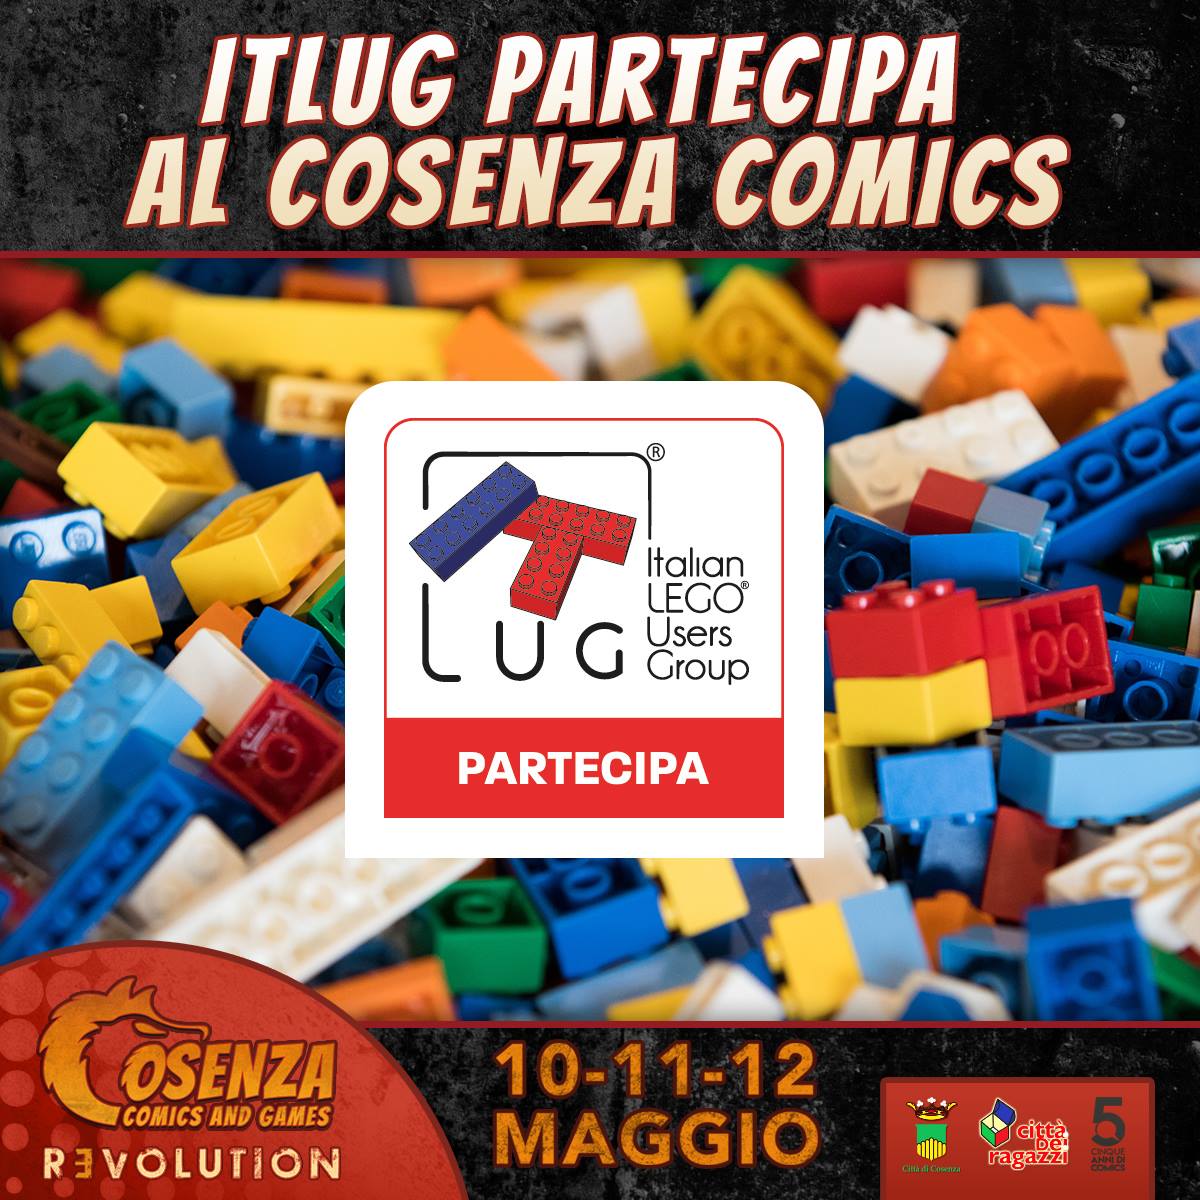 ItLUG partecipa a "Cosenza Comics and Games"